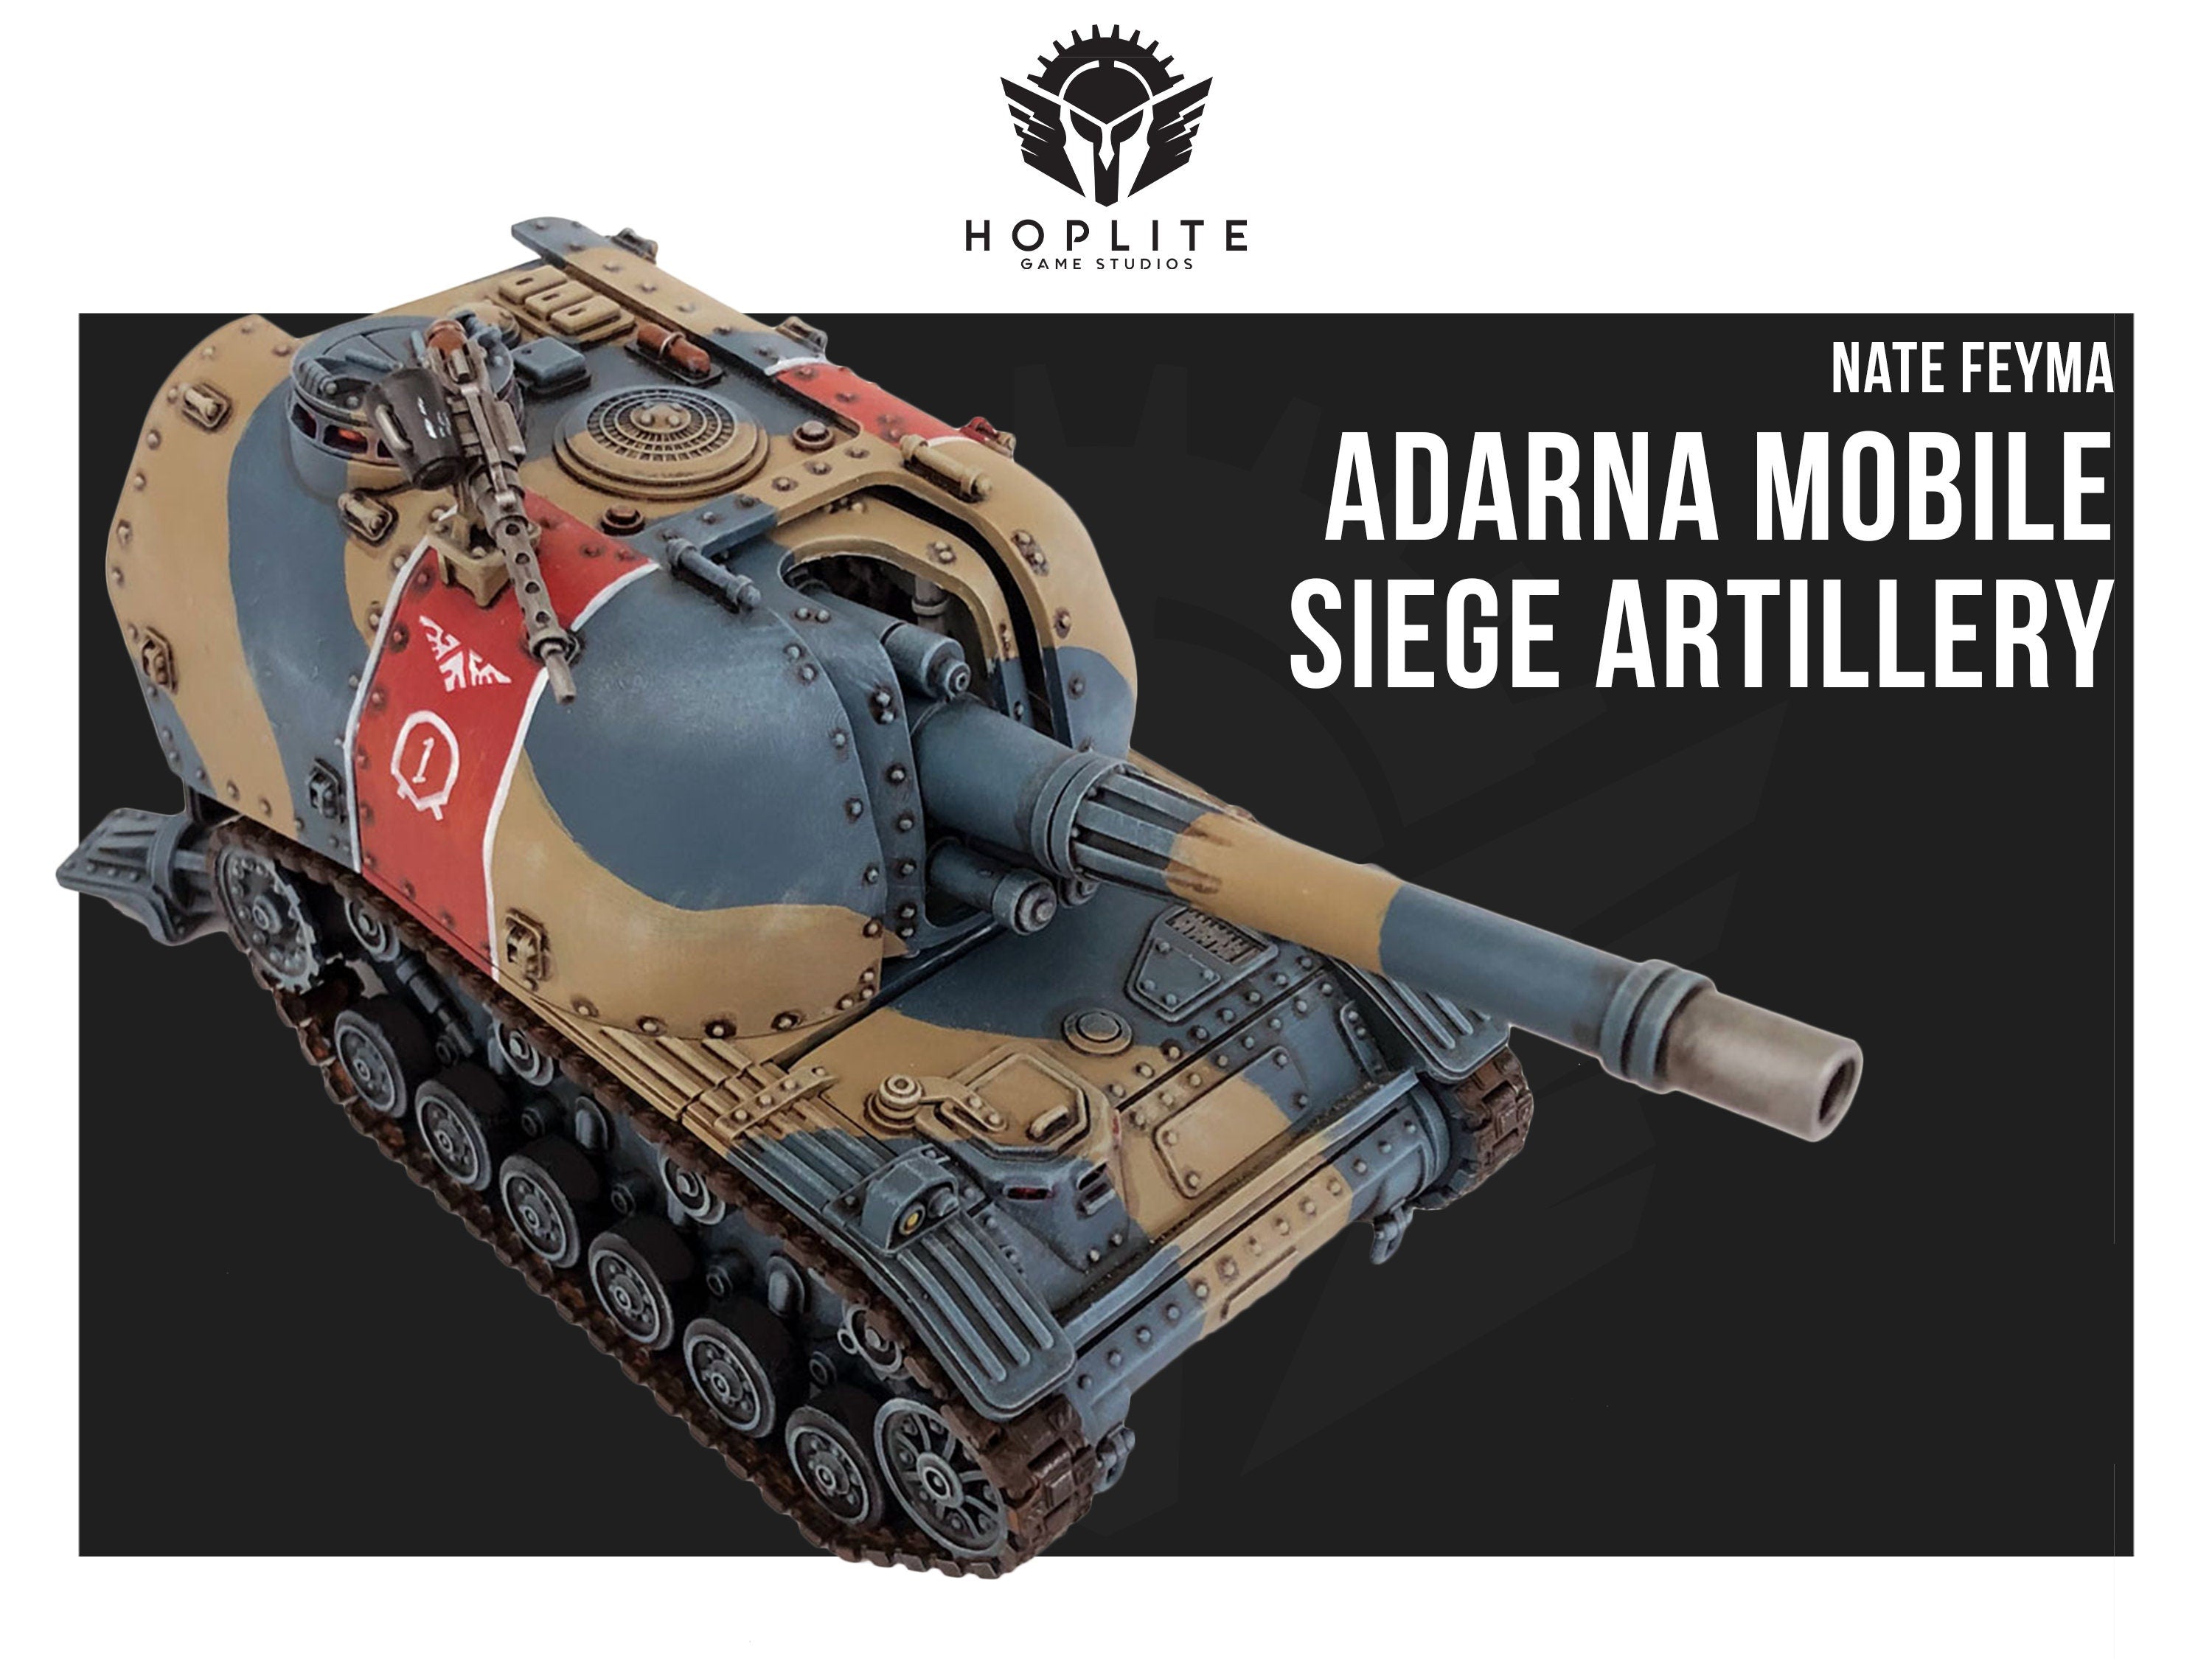 Adarna Mobile Siege Artillery